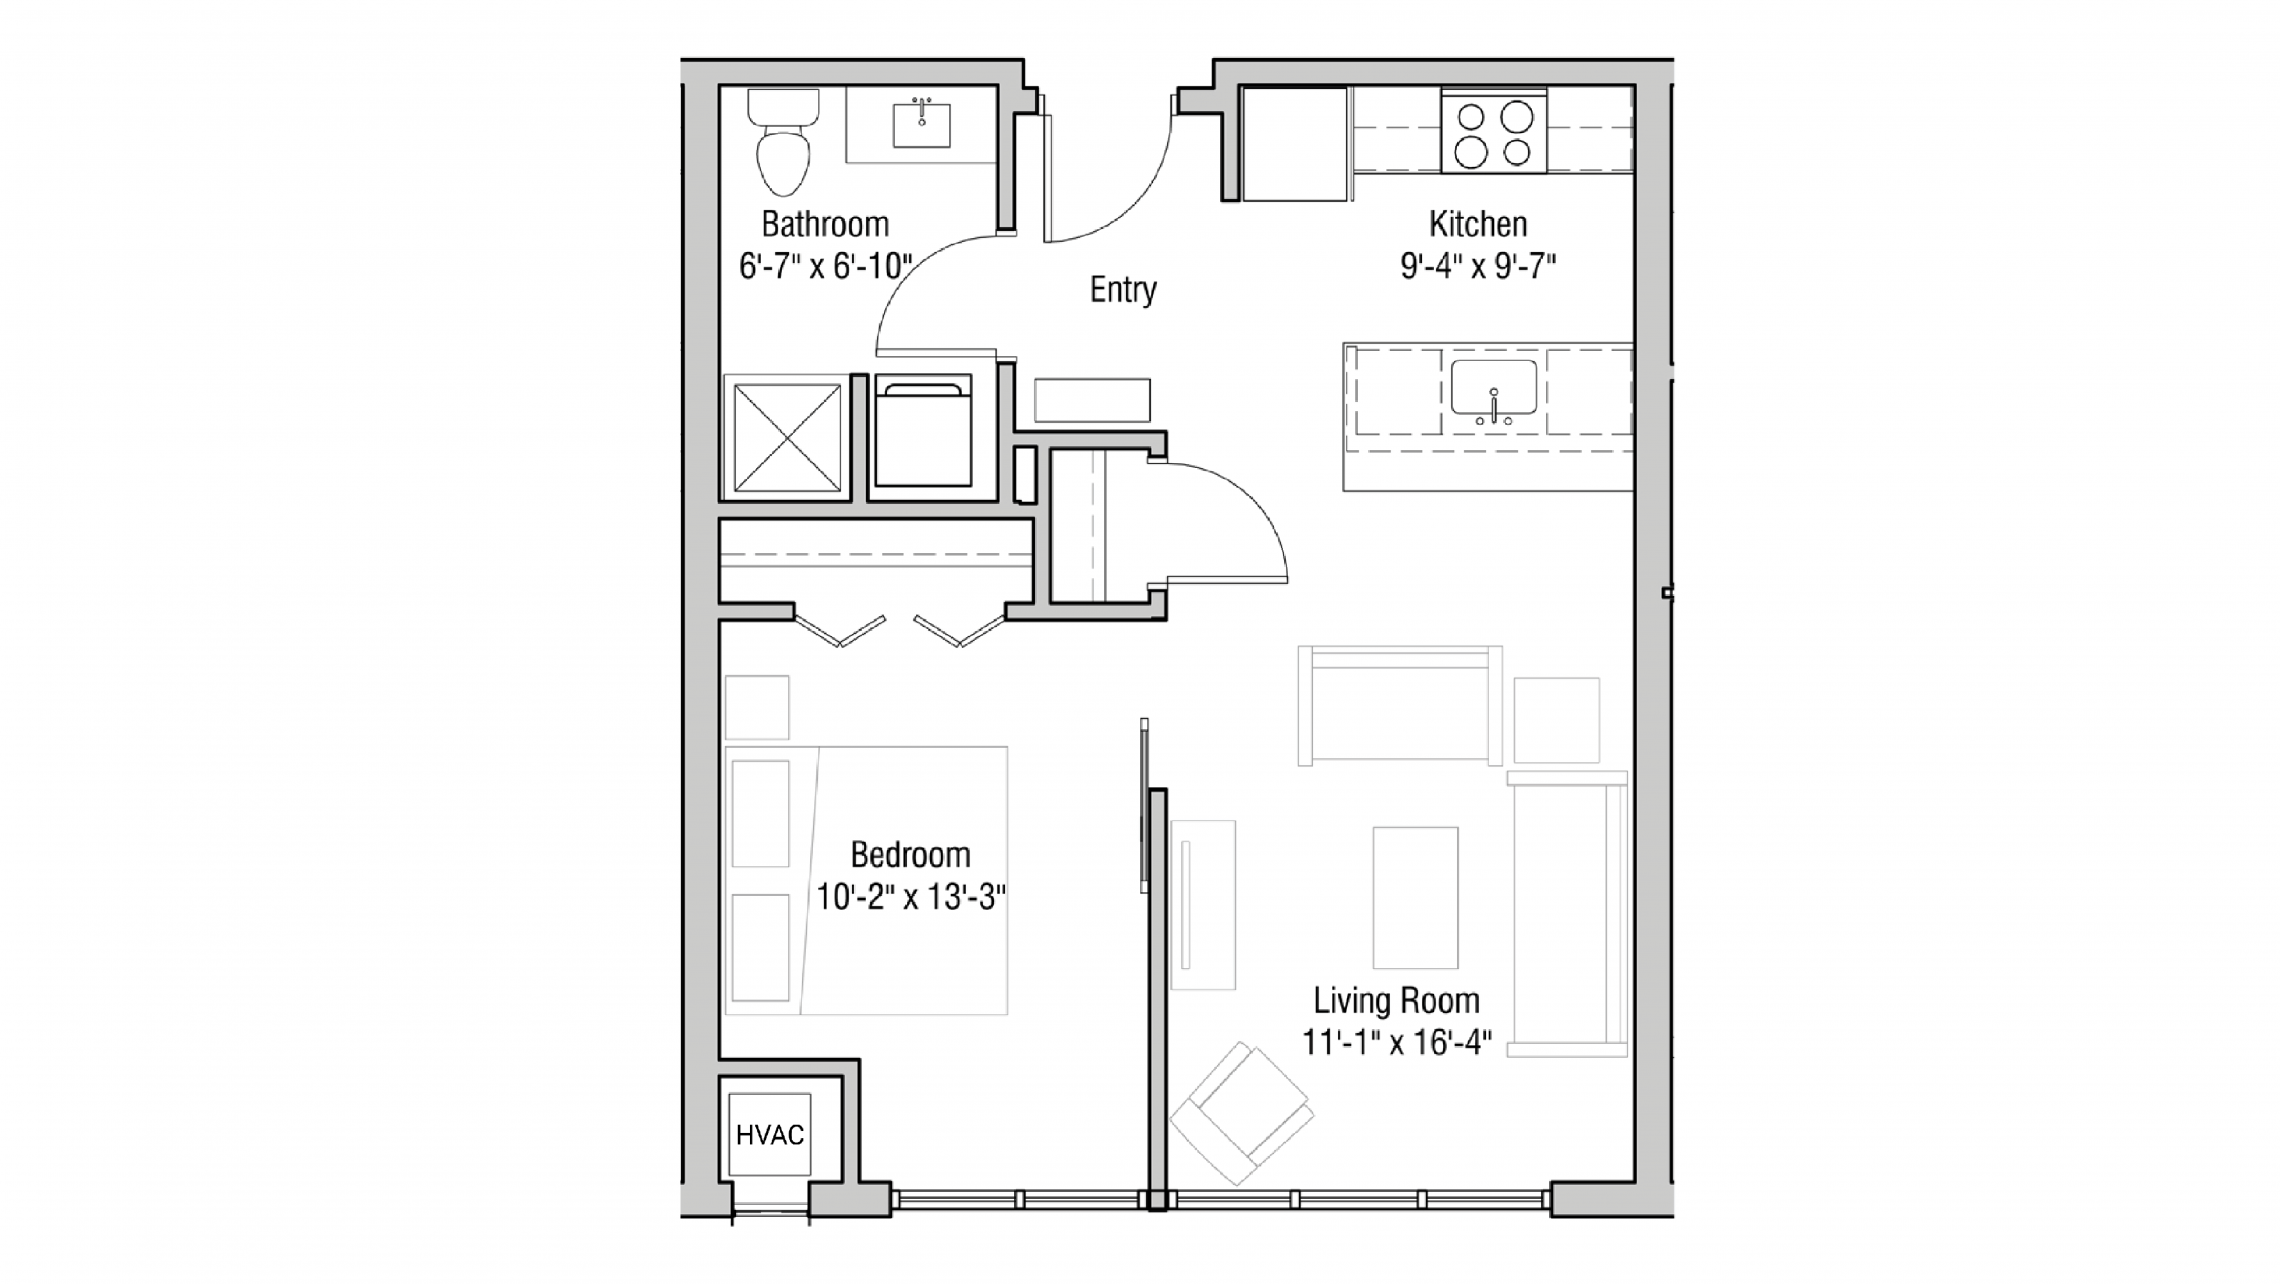 ULI Quarter Row 209 - One Bedroom, One Bathroom